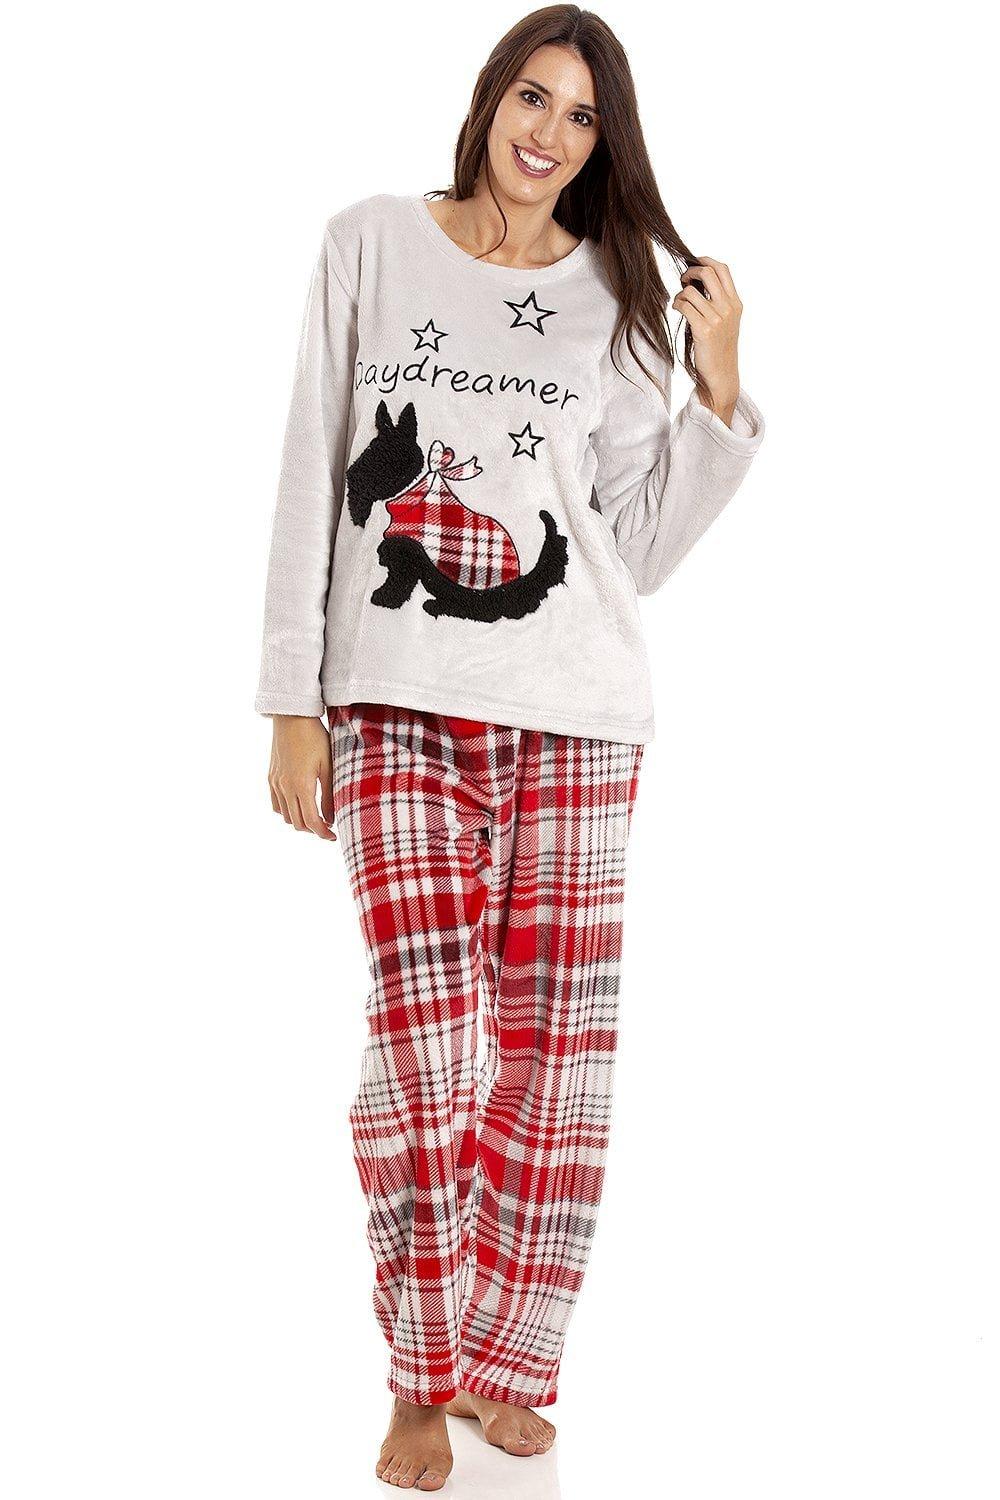 Scotty Dog Character Pyjama Set